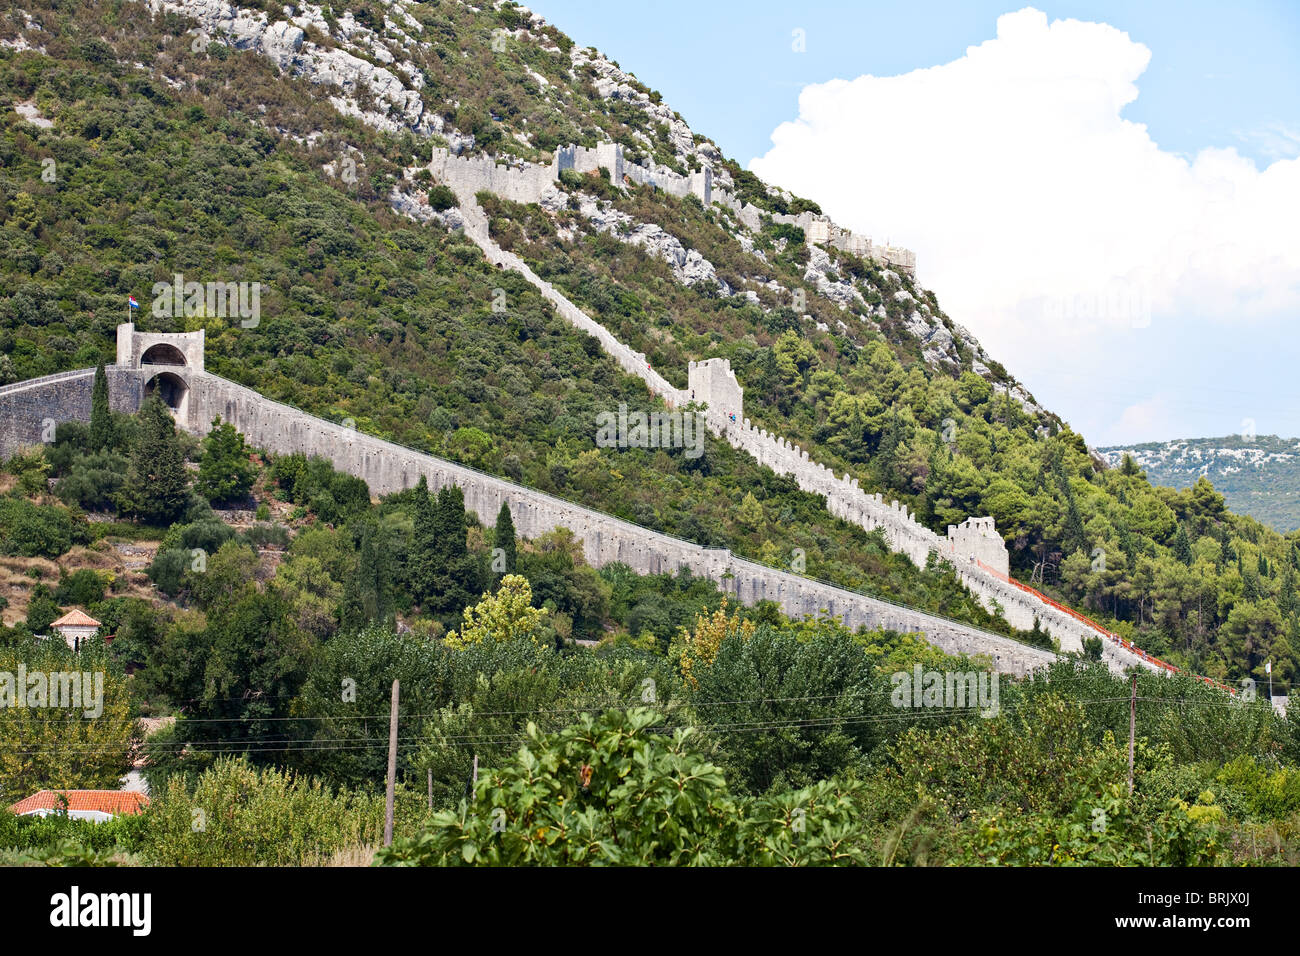 The walls of Stone, defensive stone walls from 15th century, Peljesac , Croatia Stock Photo